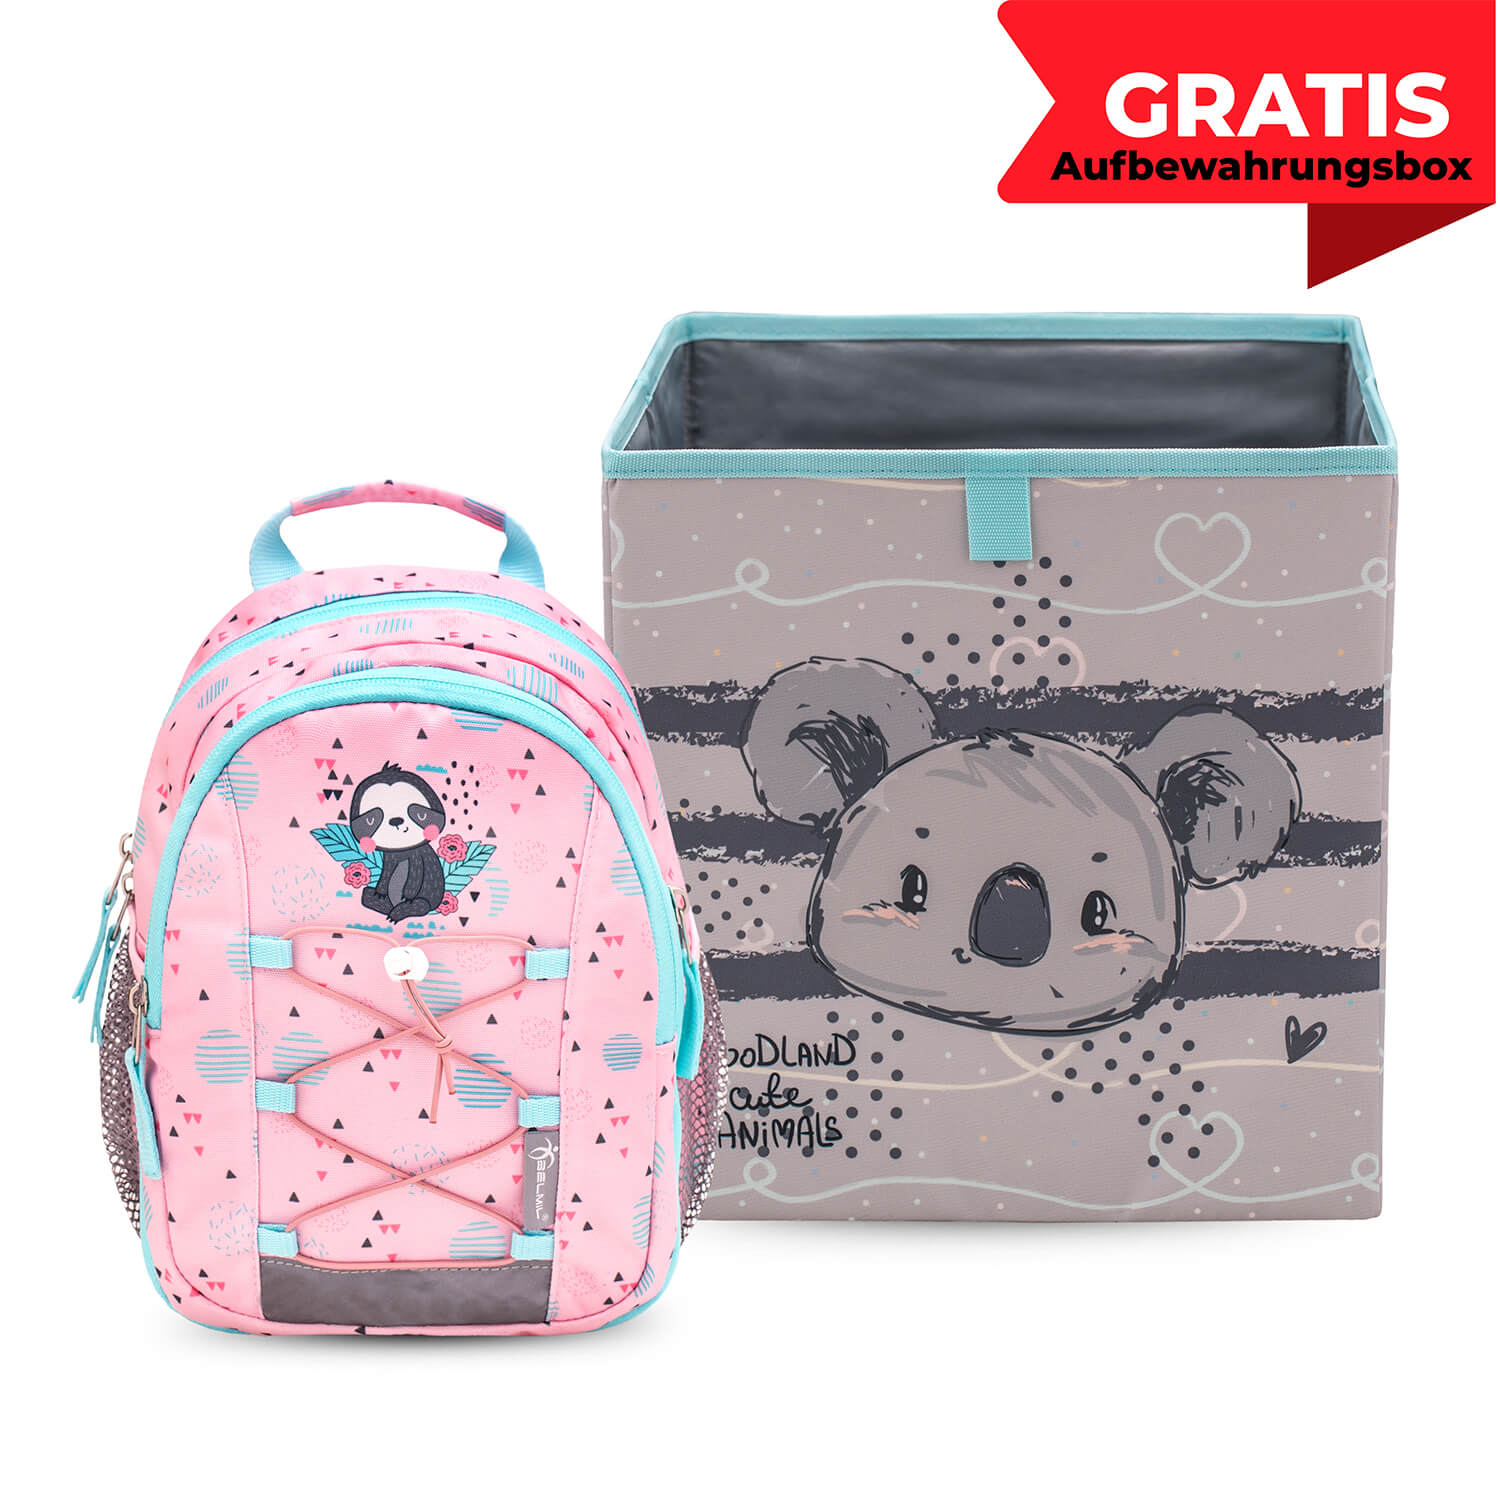 Mini Kiddy Little Sloth Kindergarten Bag with GRATIS Storage box